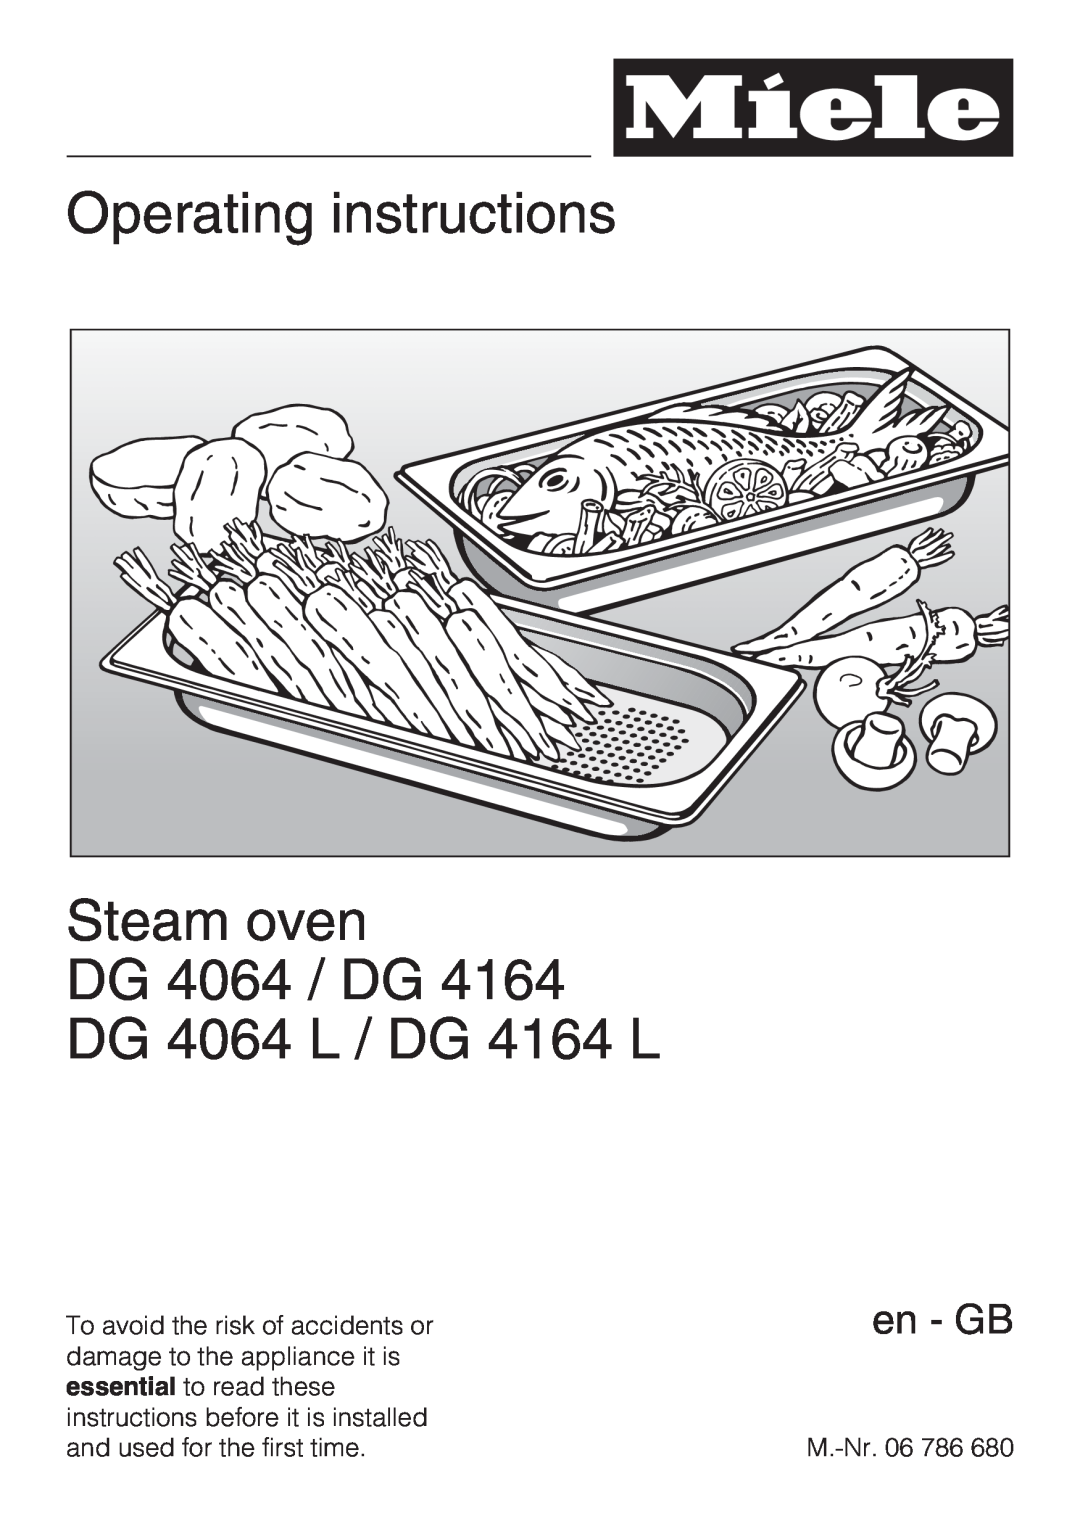 Miele operating instructions Operating instructions Steam oven DG 4064 / DG, DG 4064 L / DG 4164 L, en - GB 